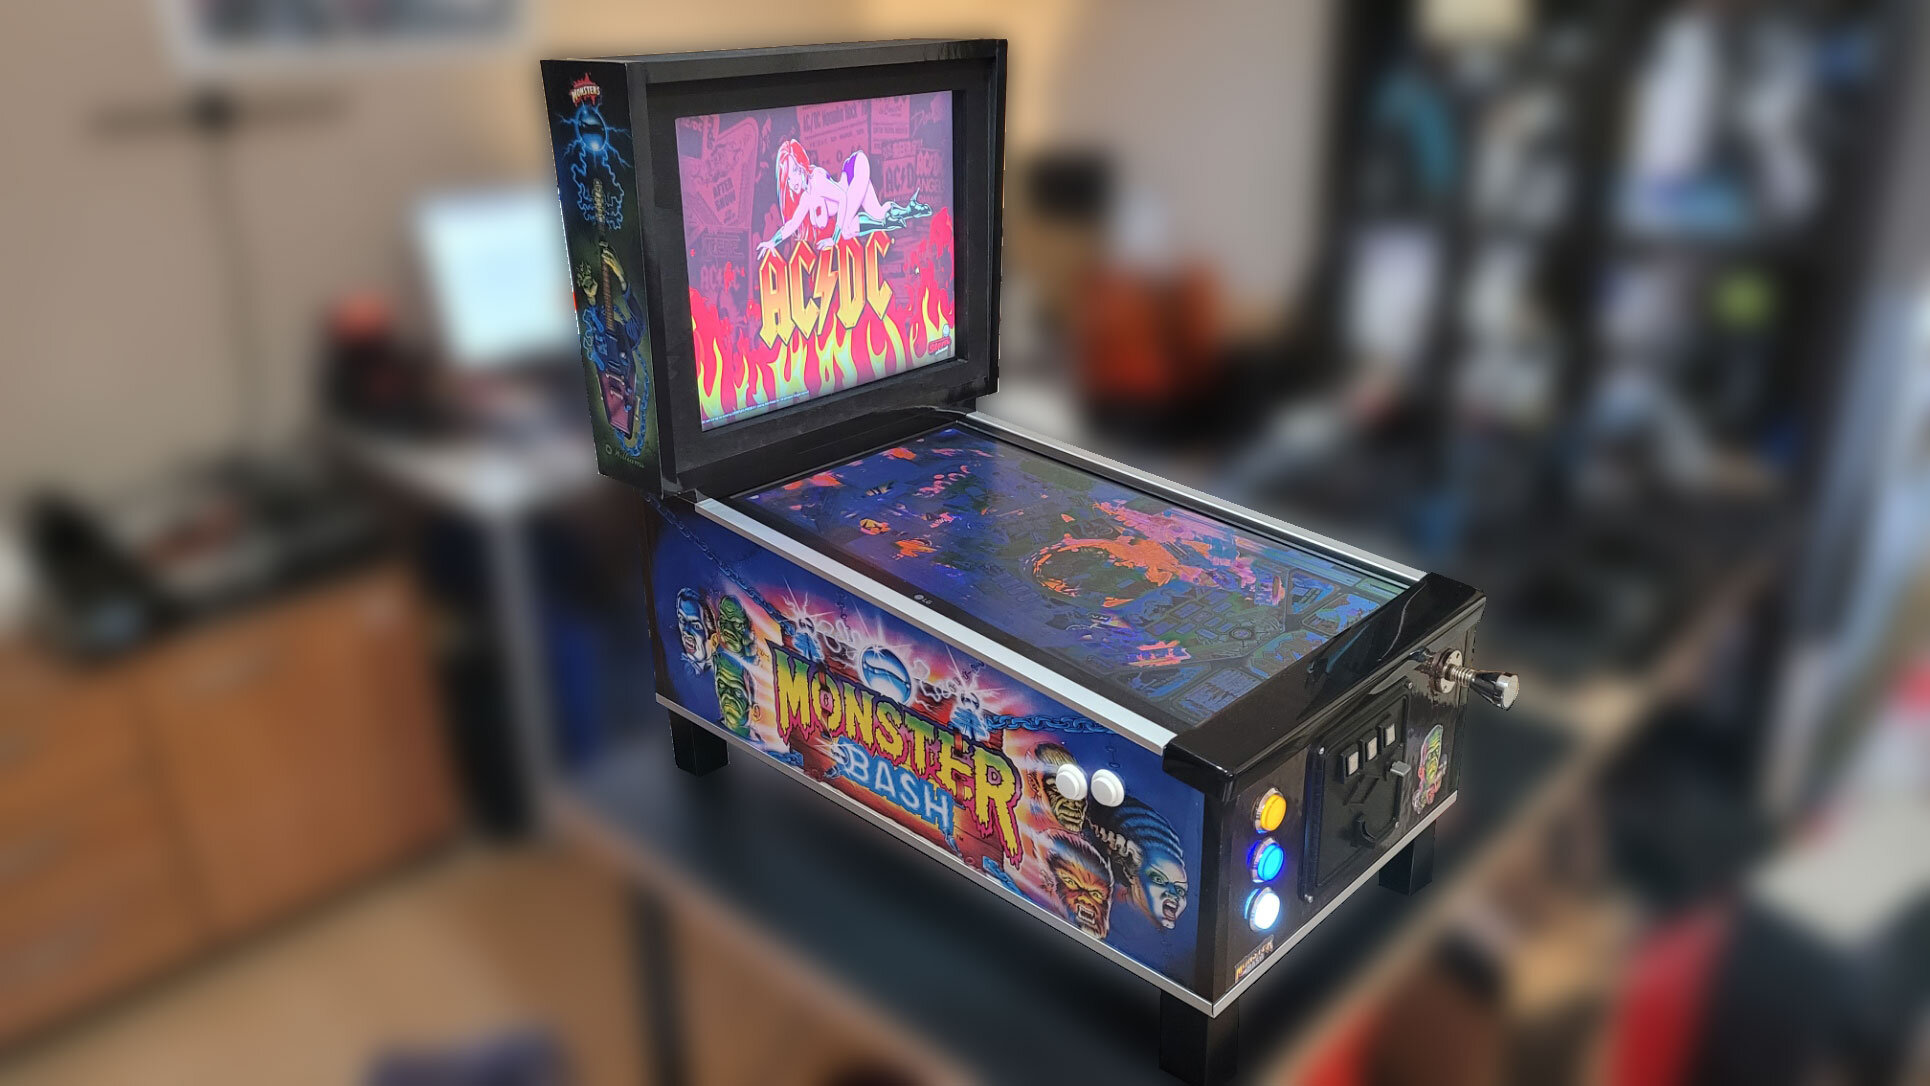 Pinbal Digital Virtual - Arcade Play Games